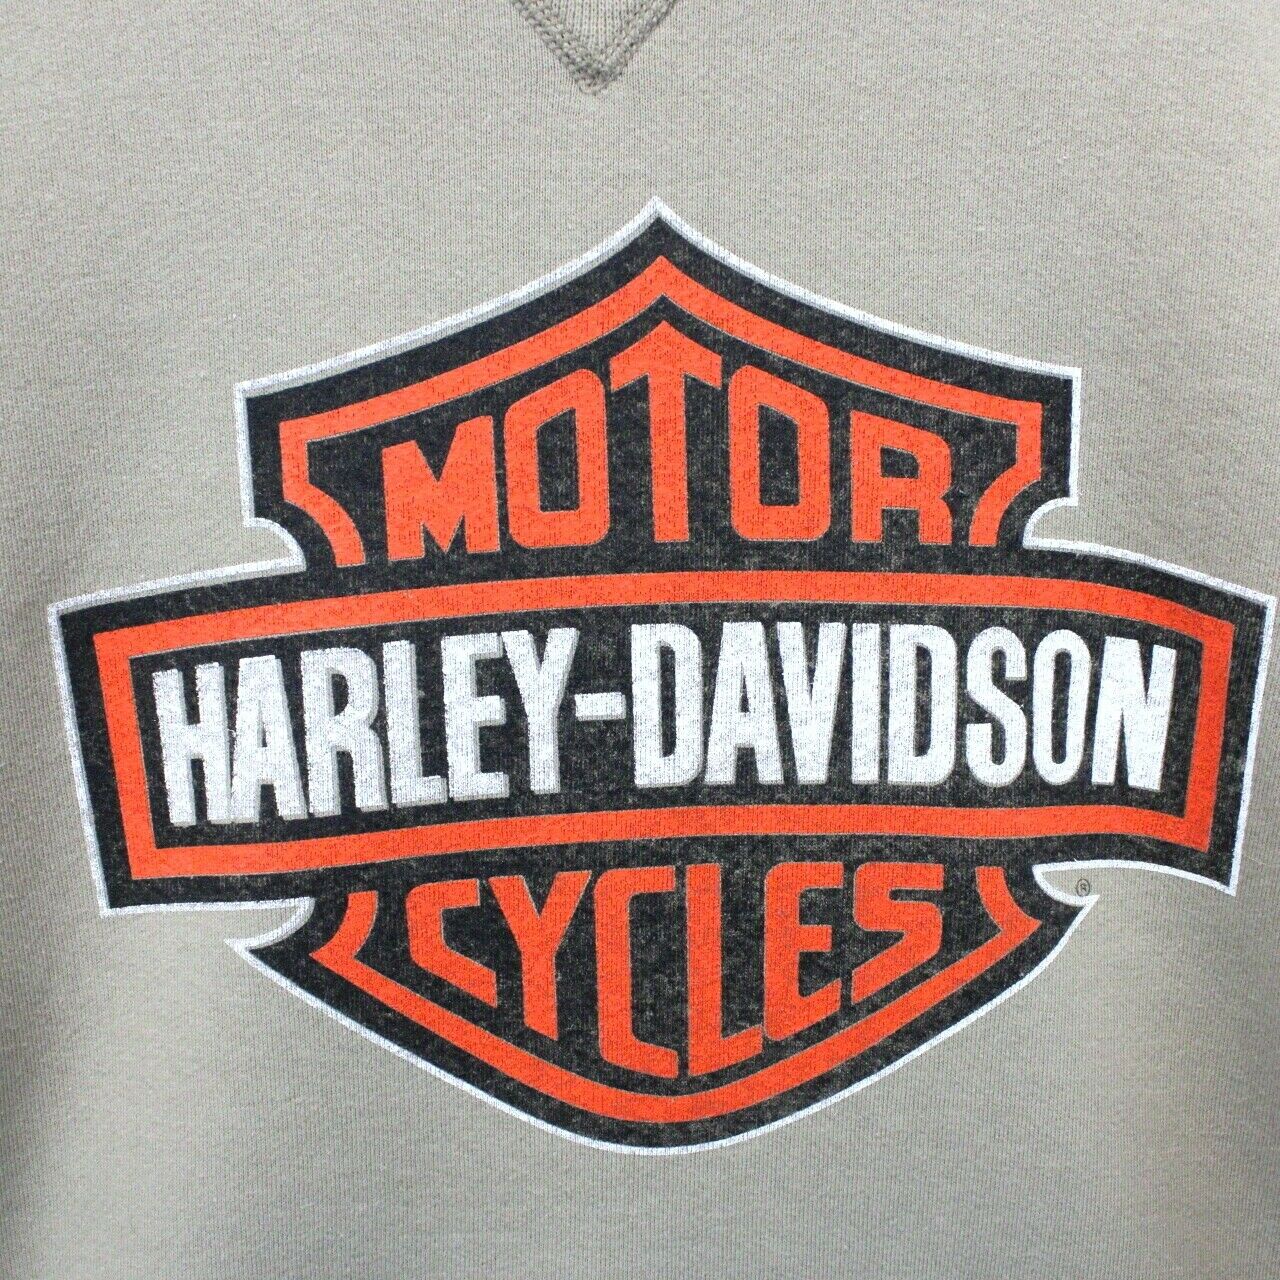 HARLEY DAVIDSON 90s Sweatshirt Beige | Large